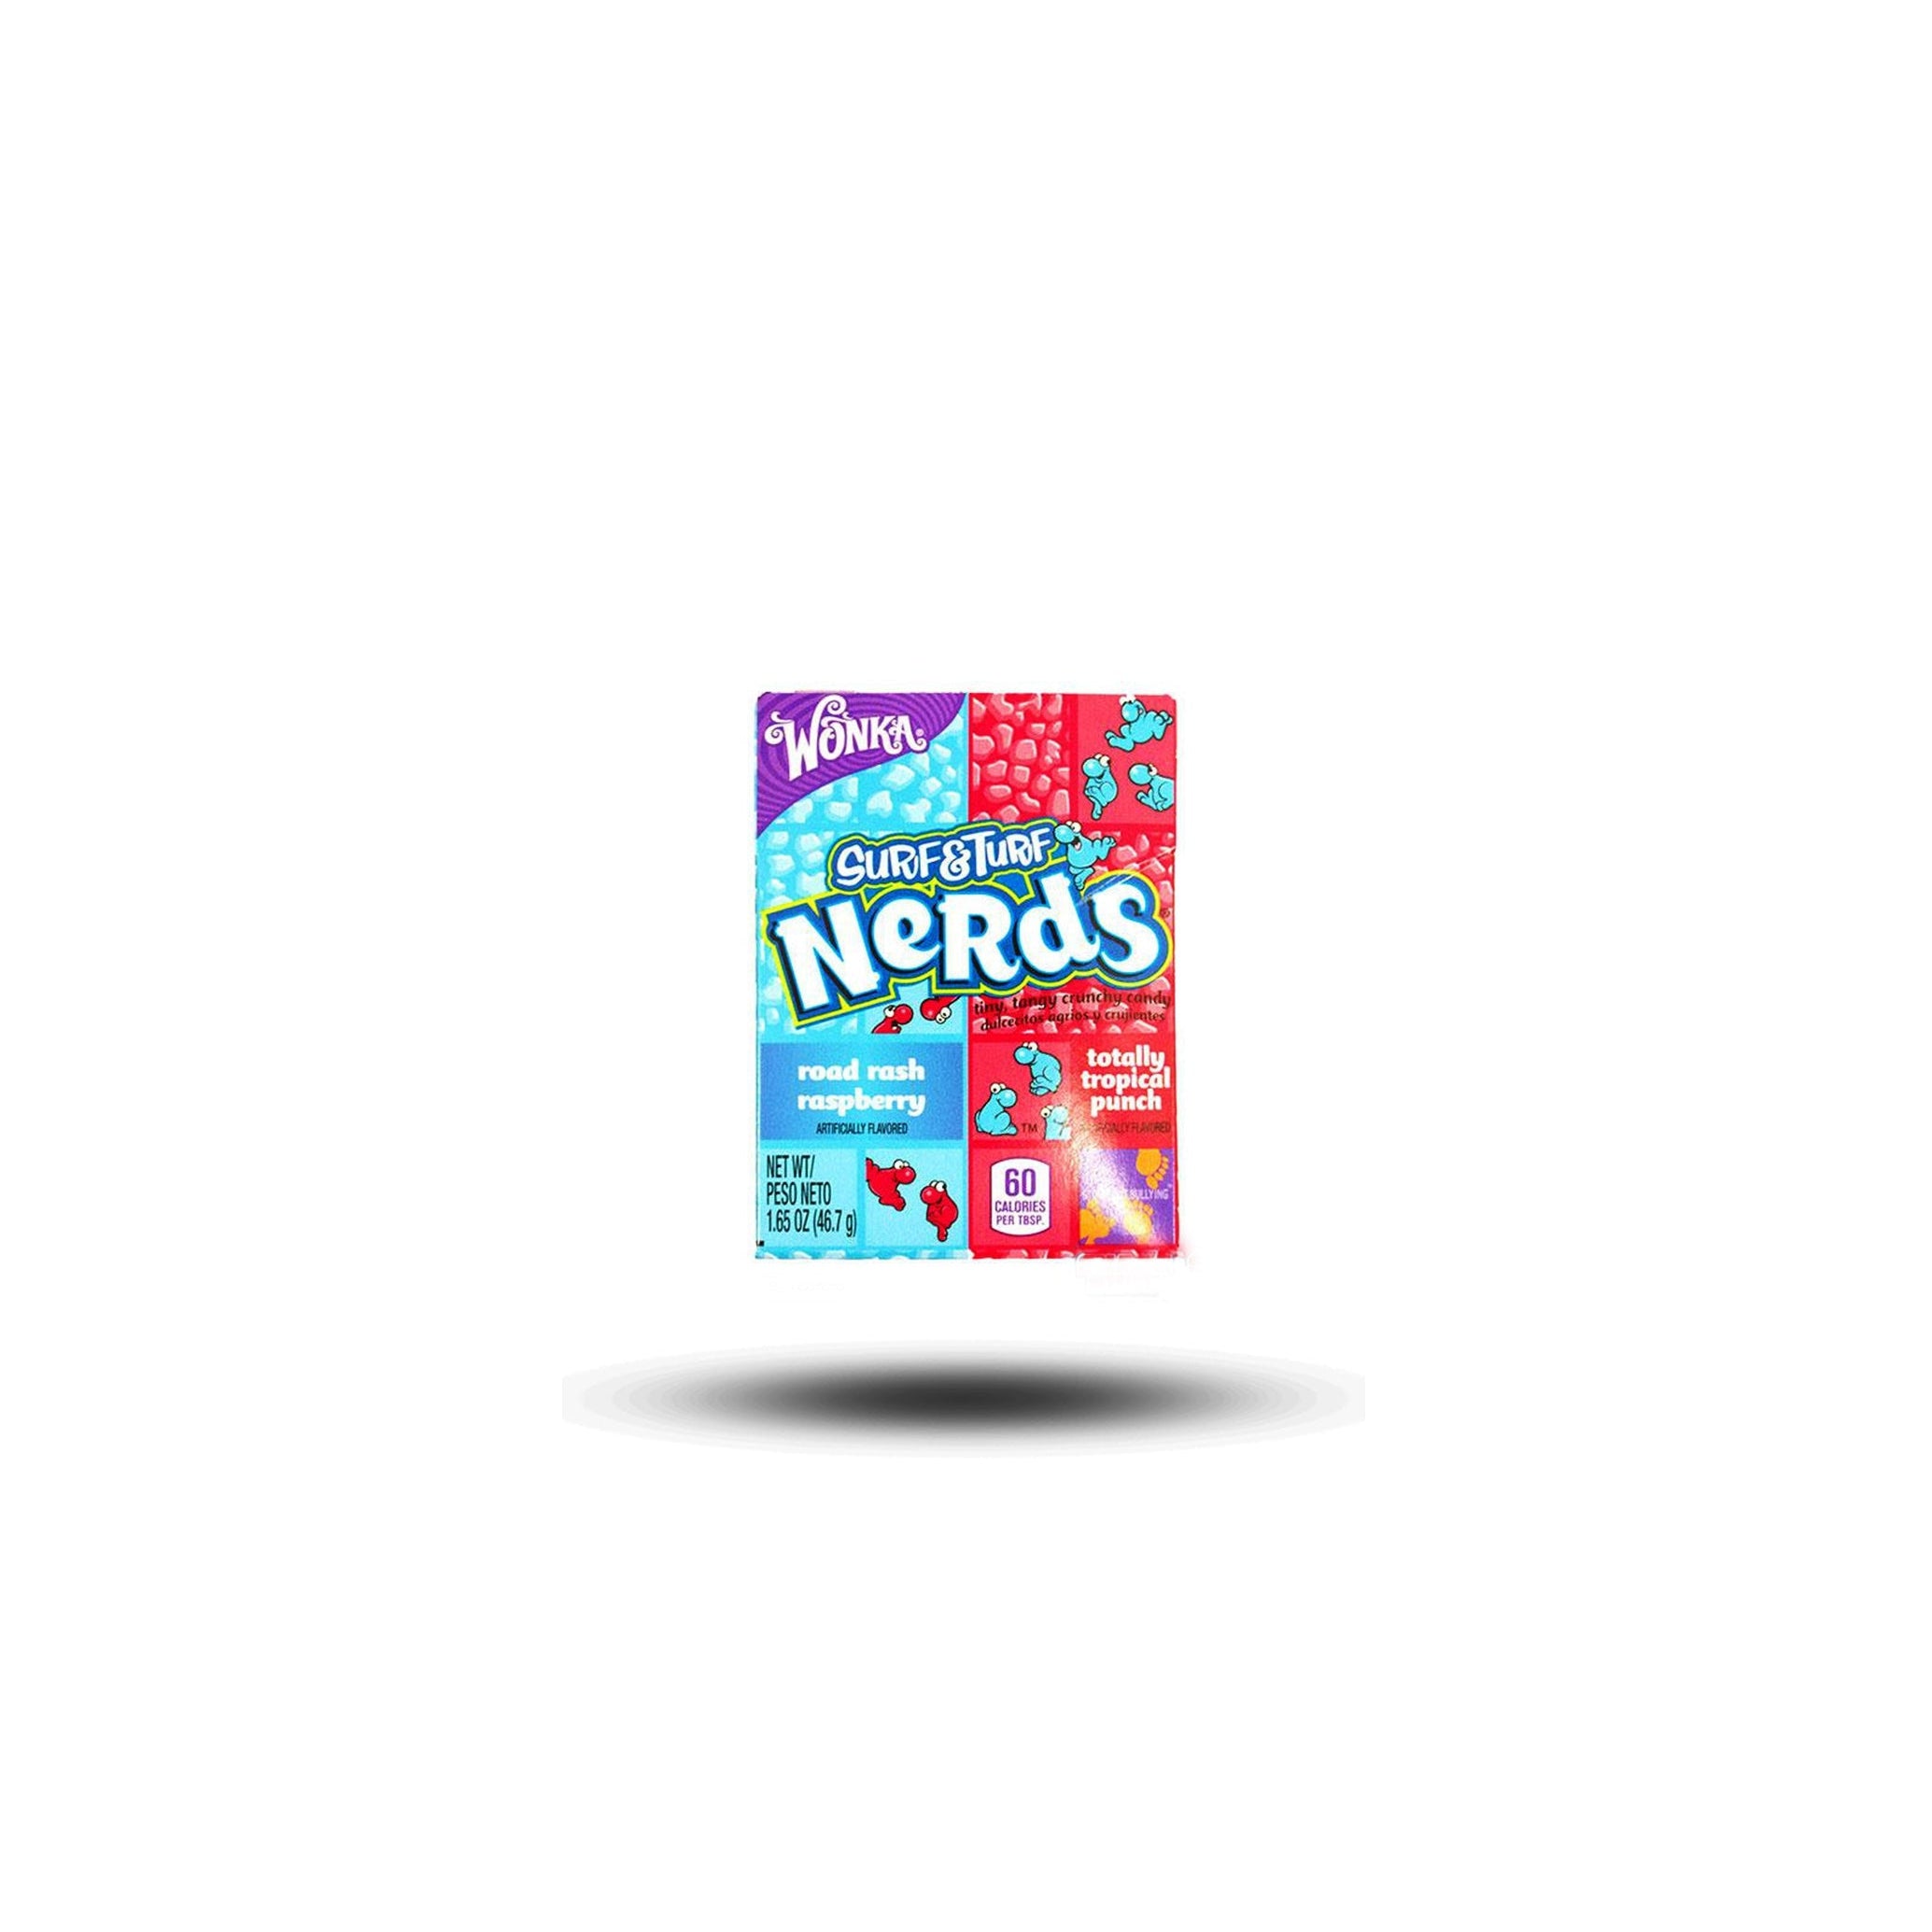 Nerds Candy - Surf & Turf - raspberry & tropical punch 46g-Ferrara Candy Company-SNACK SHOP AUSTRIA